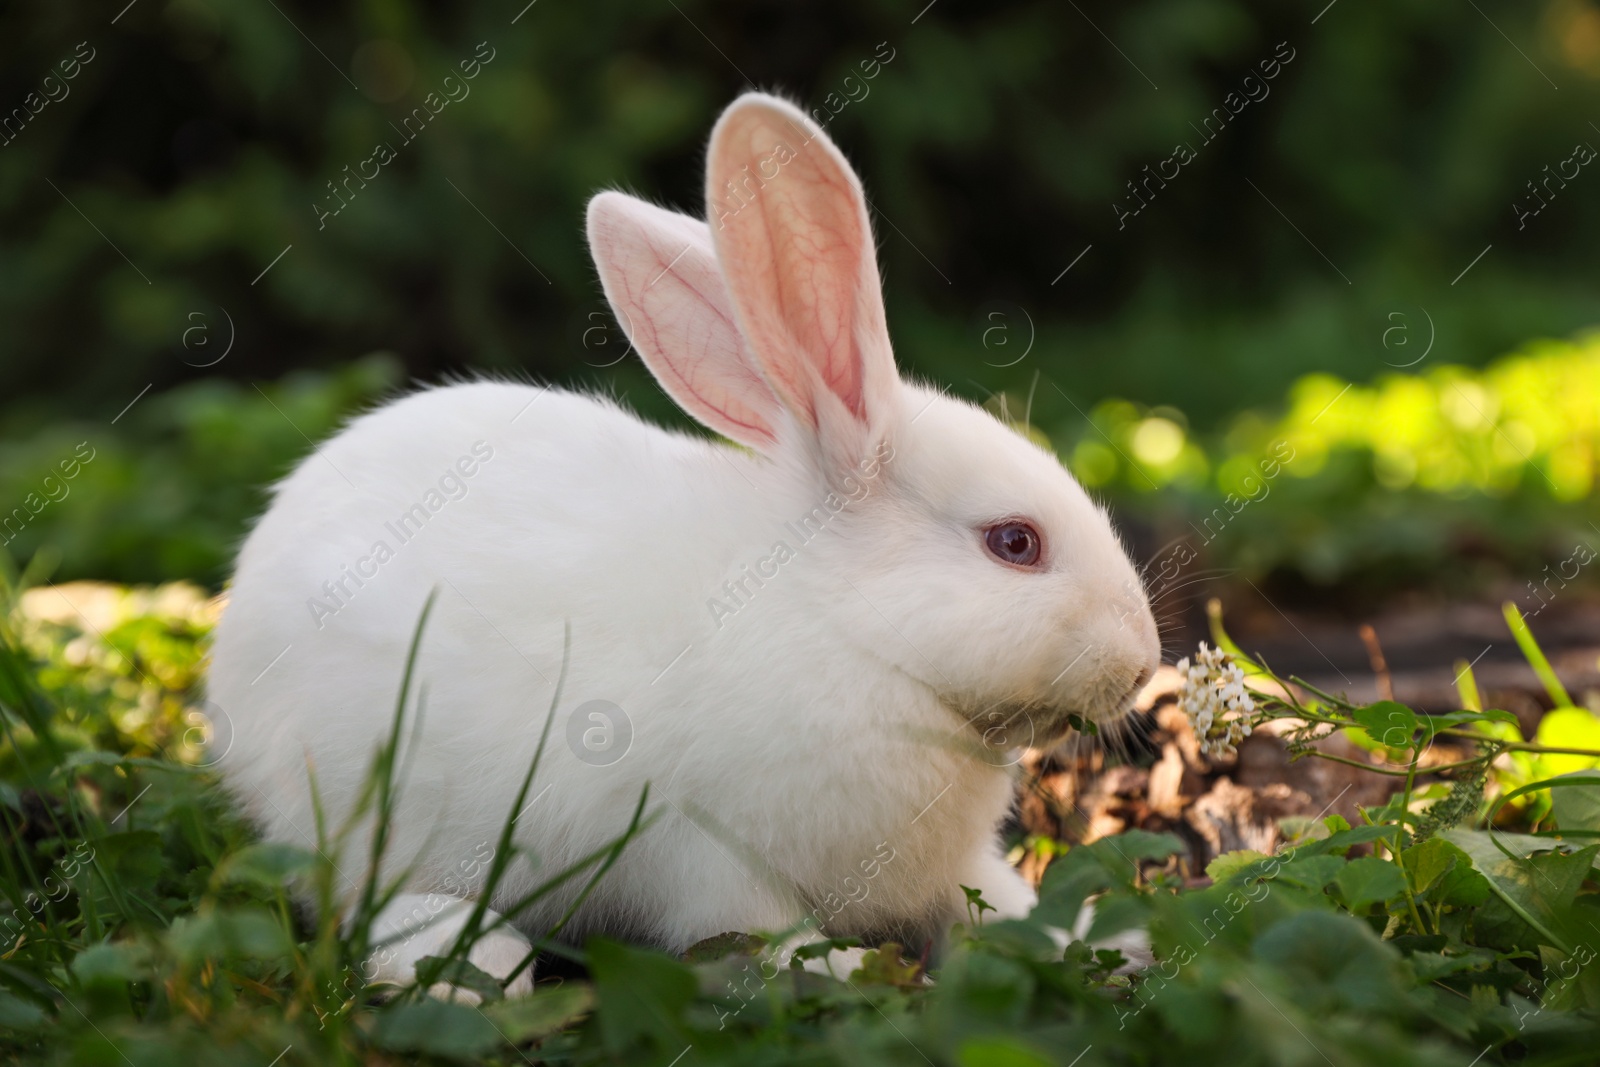 Photo of Cute white rabbit near tree stump on green grass outdoors